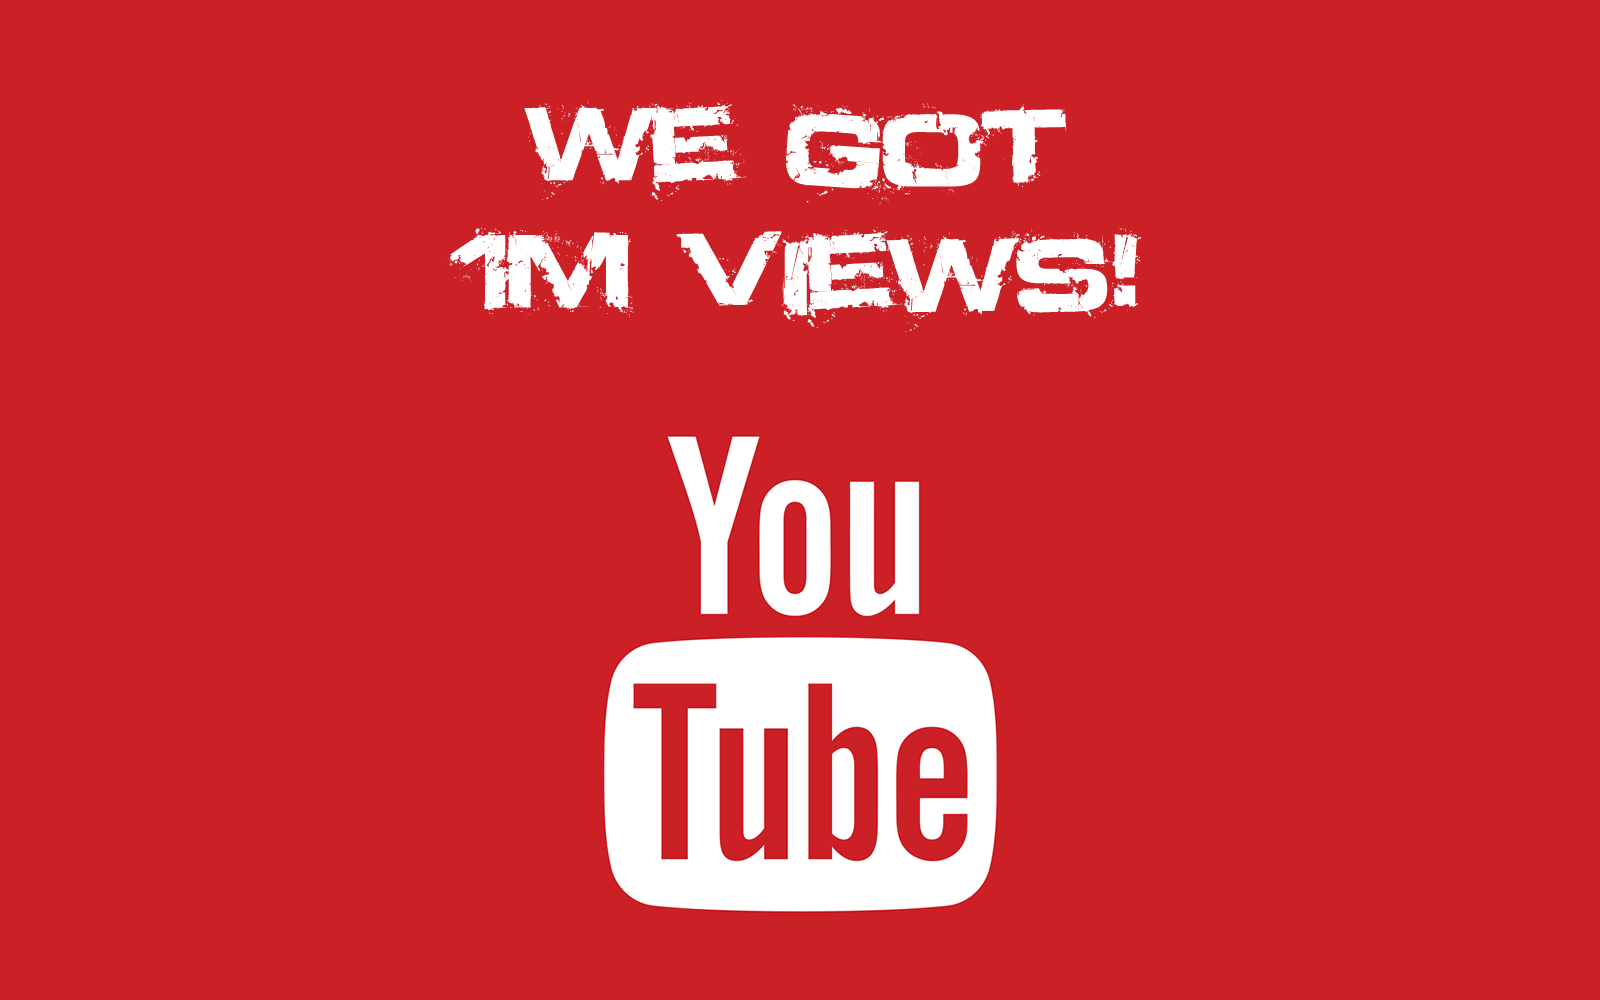 1 million views on youtube